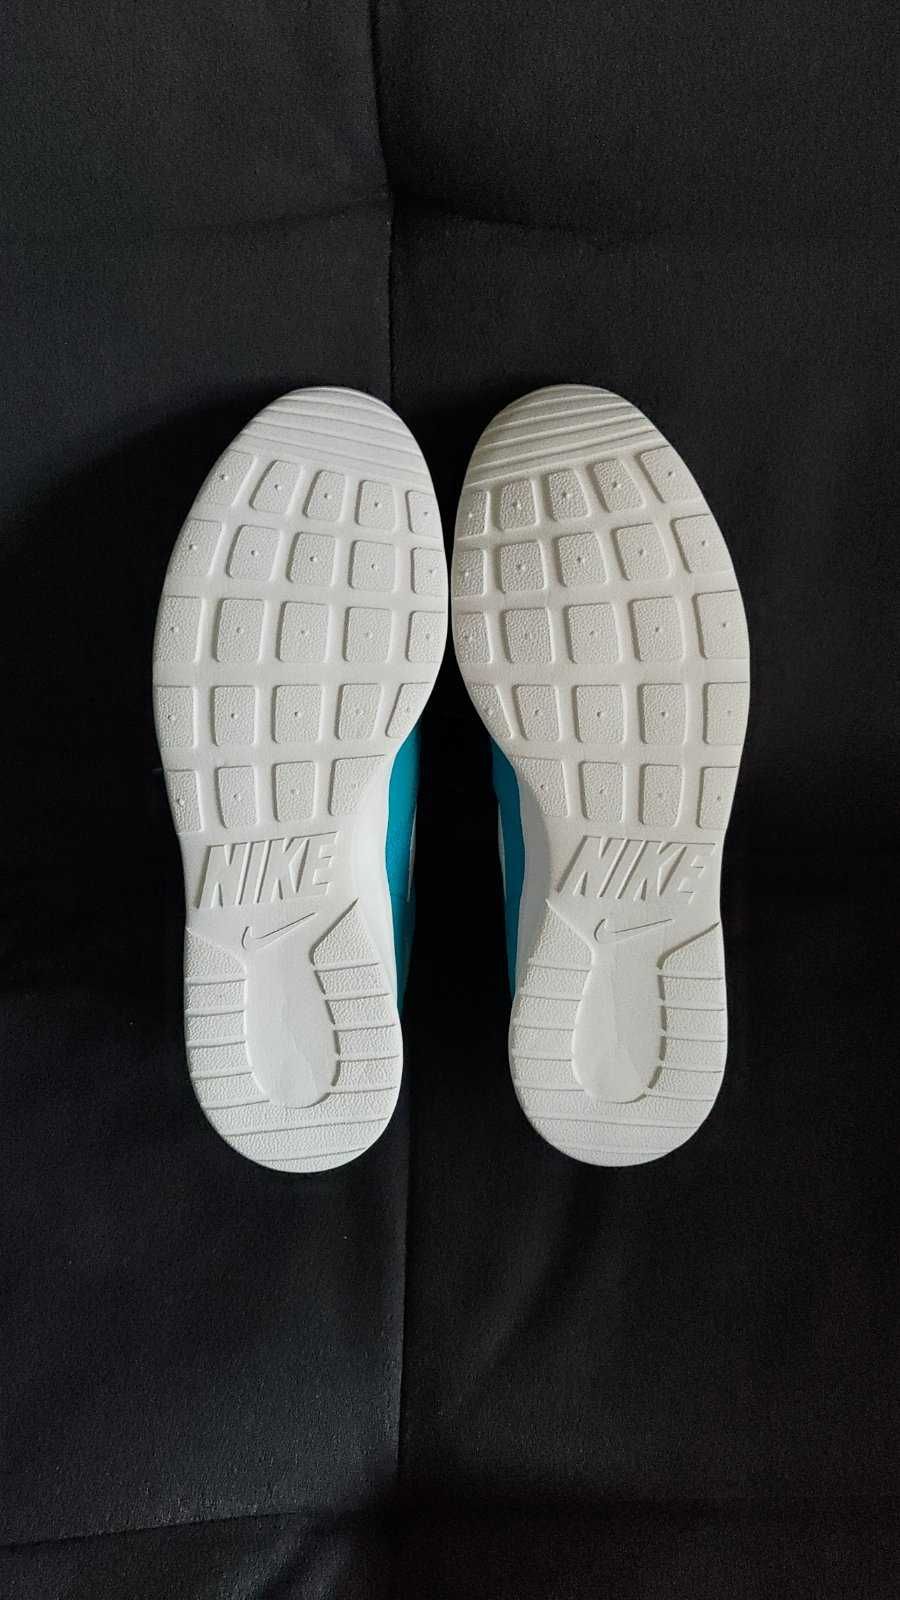 NEW кроссы Nike Kaishi 654473-411 р.45